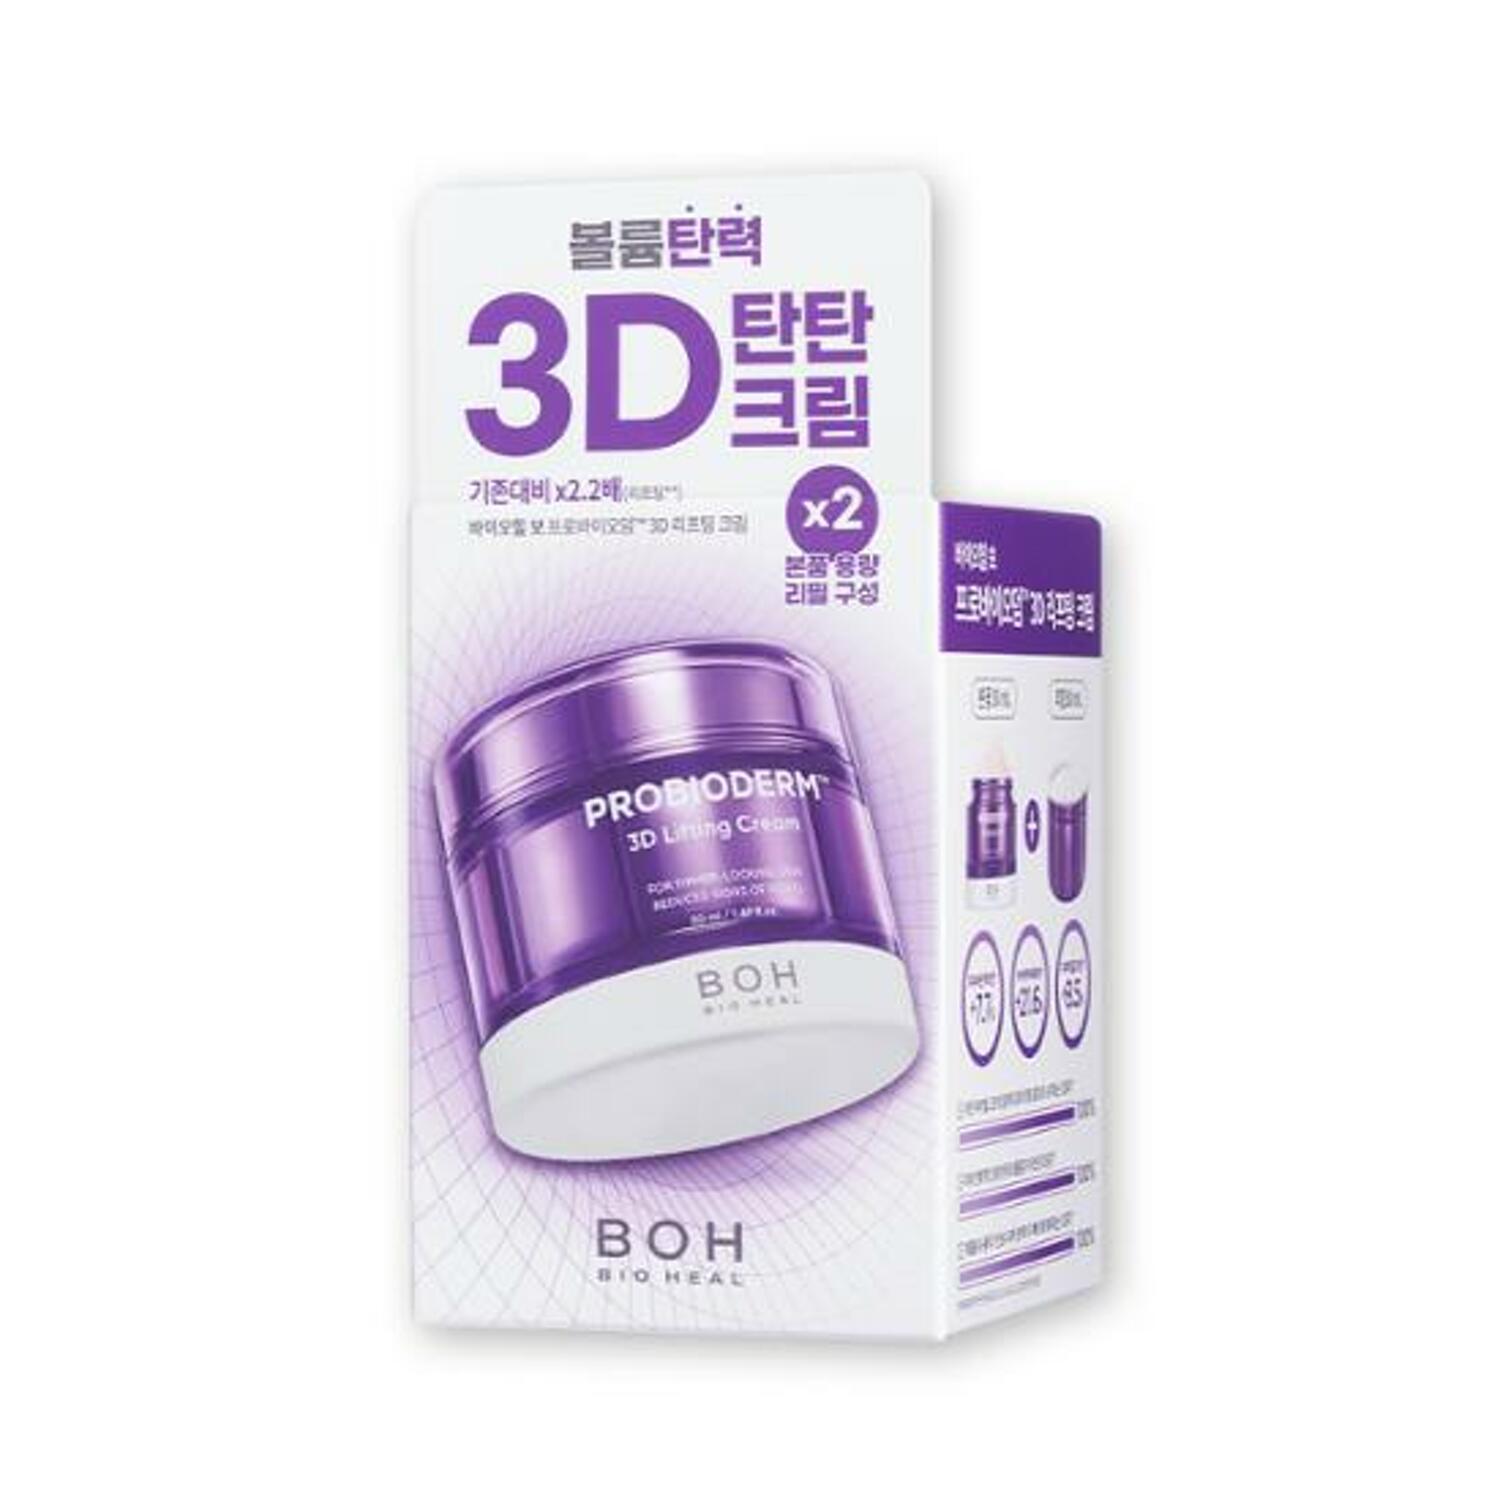 BIOHEAL BOH Probioderm 3D Lifting Cream 50mL Refill Set - DODOSKIN